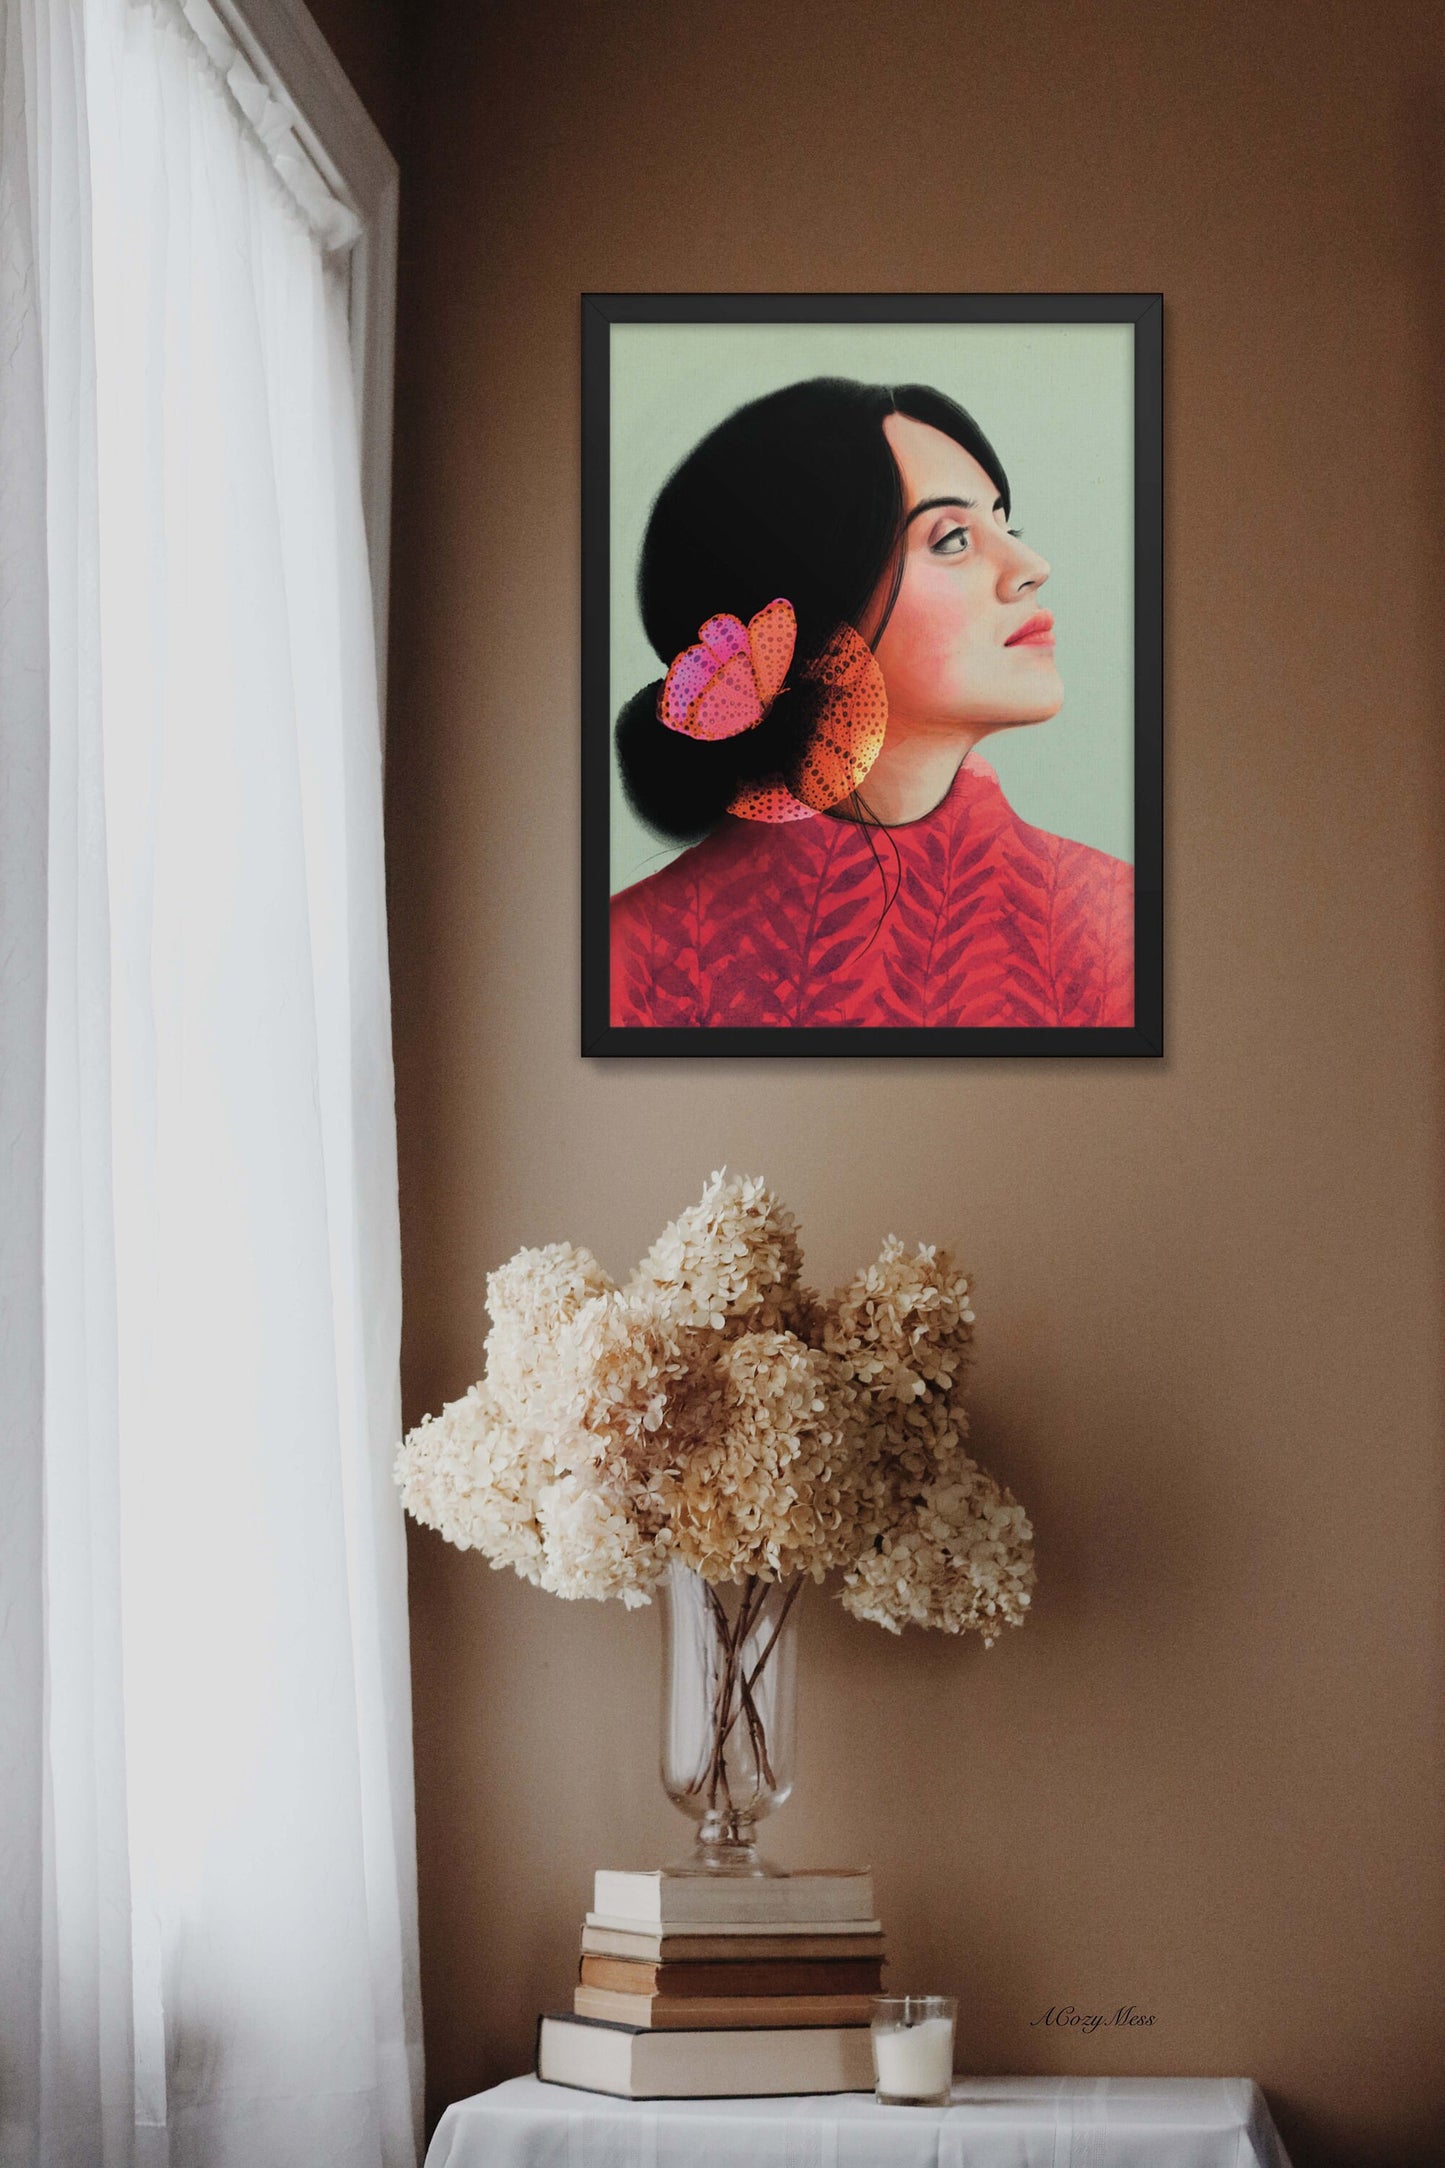 Woman Art Poster, Portrait Art Print, Bedroom Decor for Women, Giclée printing quality